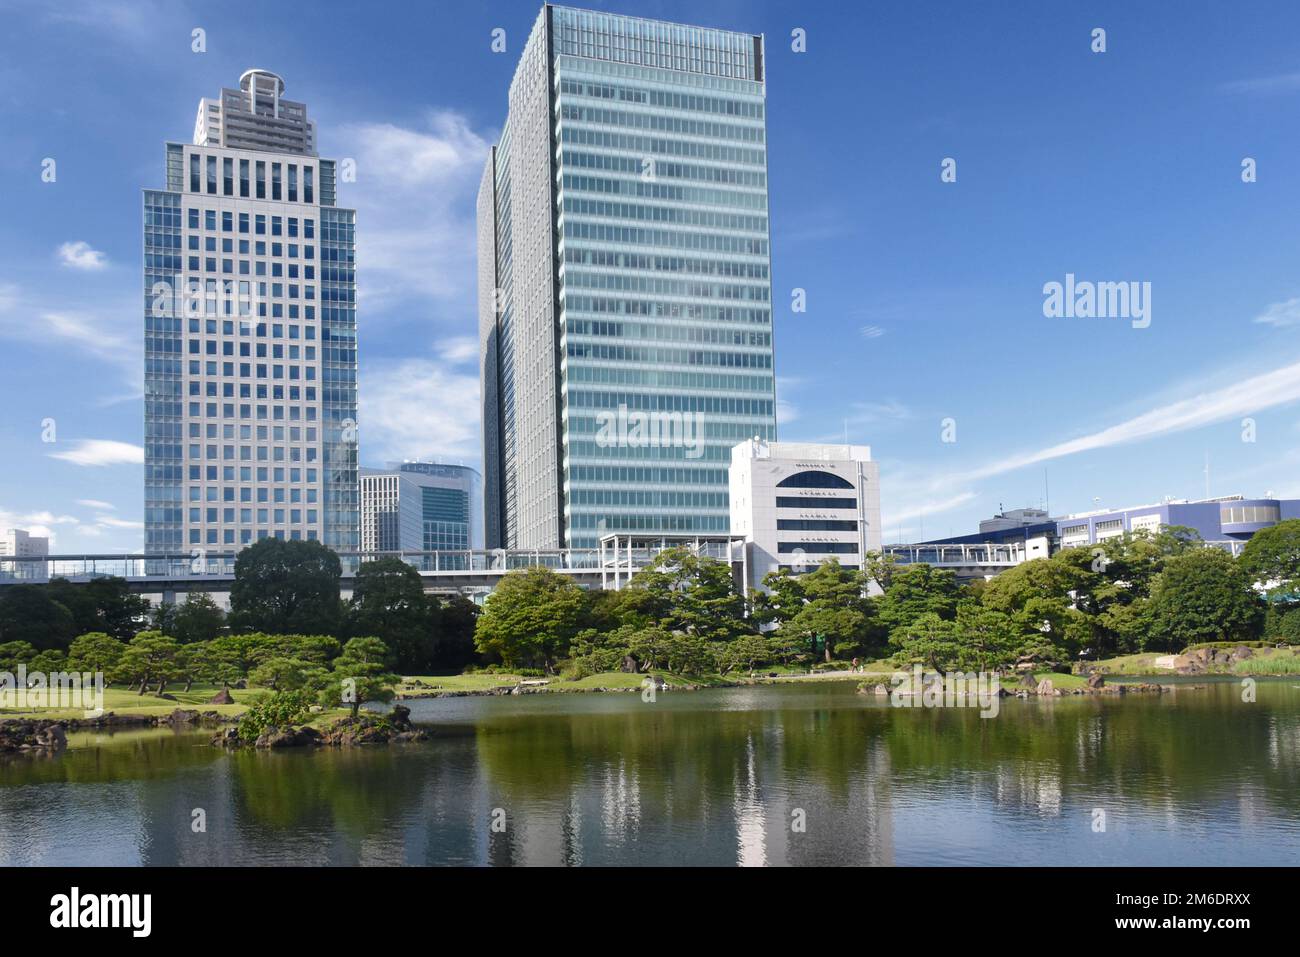 The Kyū Shiba Rikyū Garden - a public garden and former imperial garden in Minato ward in Tokyo, tall skyscrapers in the background Stock Photo